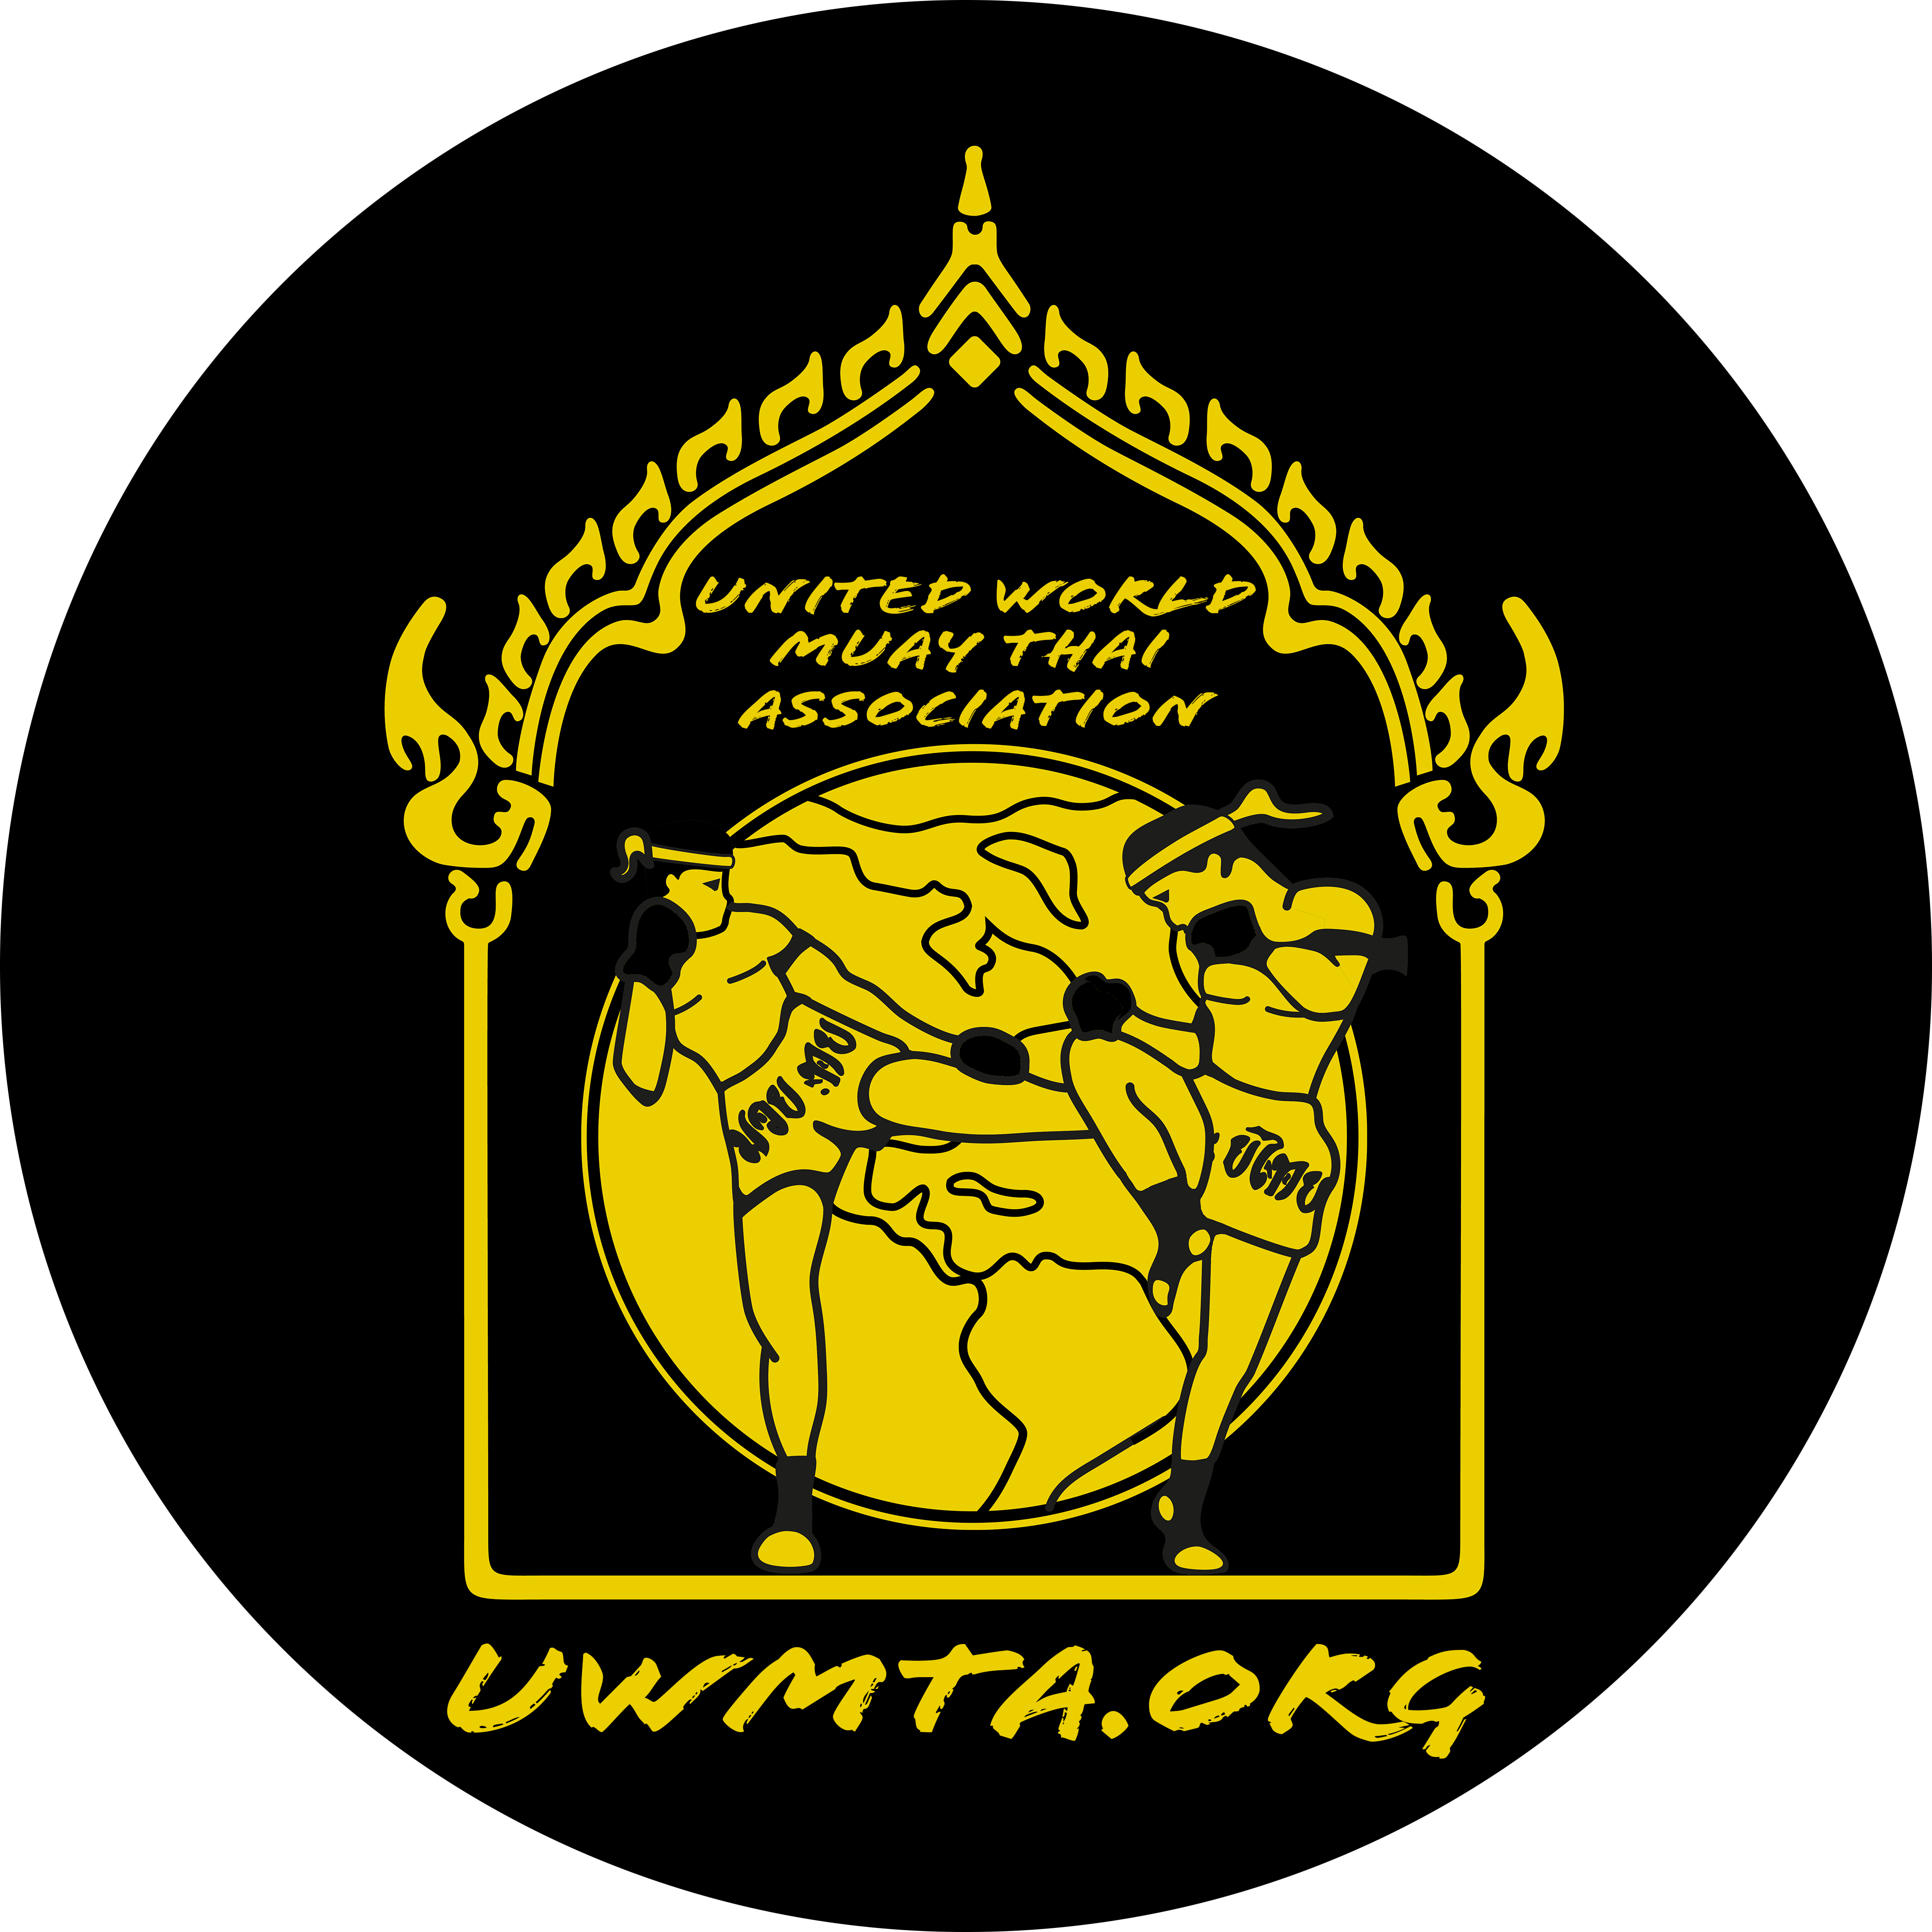 United World Muay Thai Association Article - Network World News